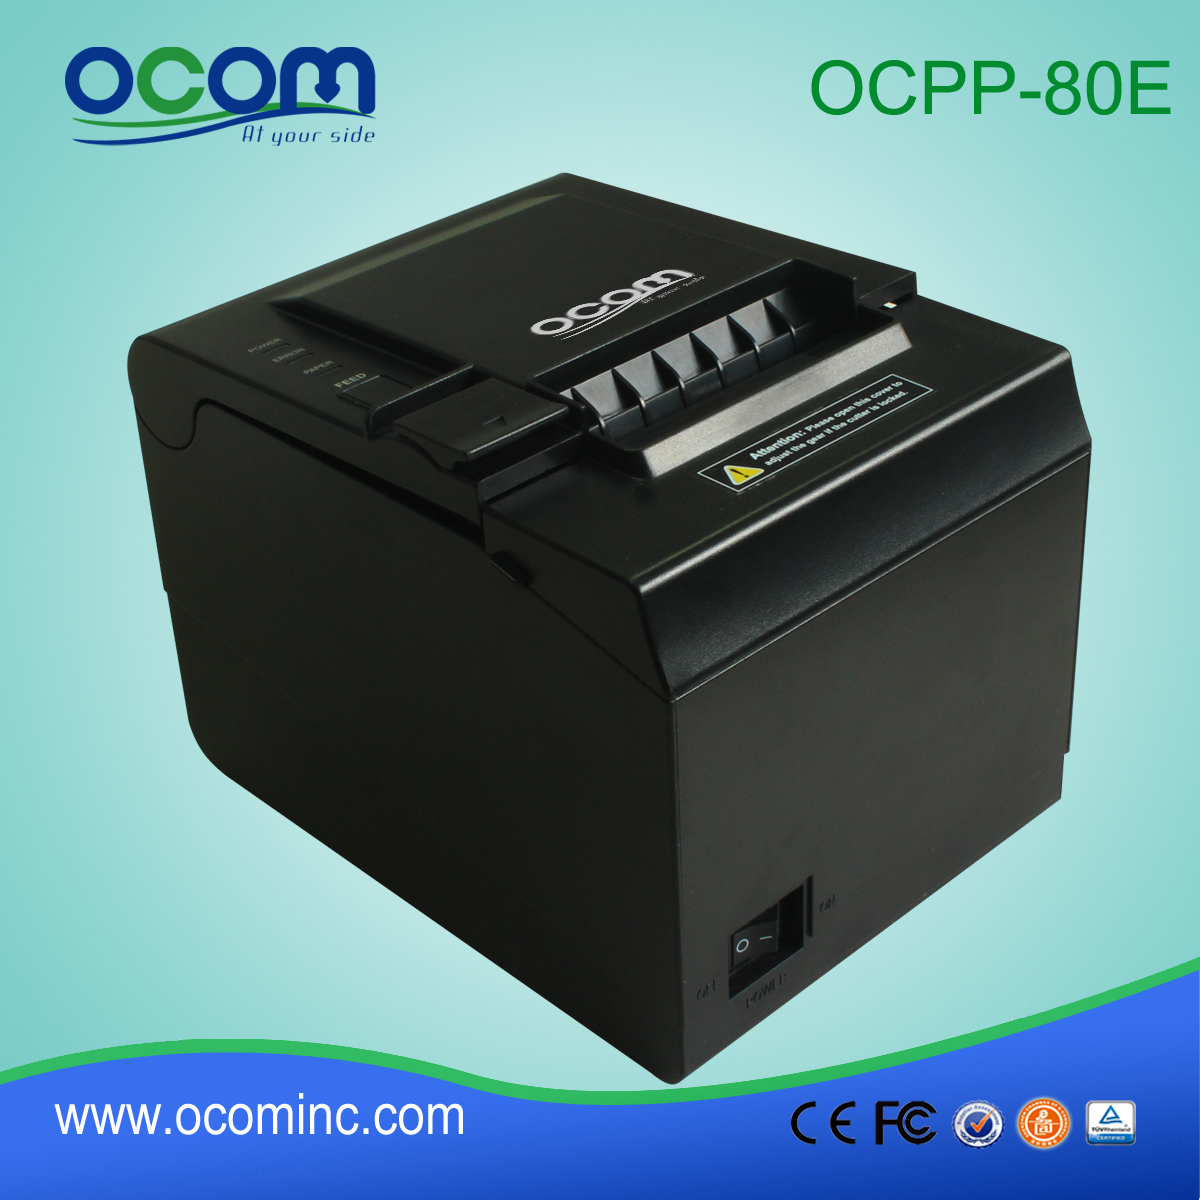 OCPP-80E --- China kostengünstige Thermo-Belegdrucker Preis